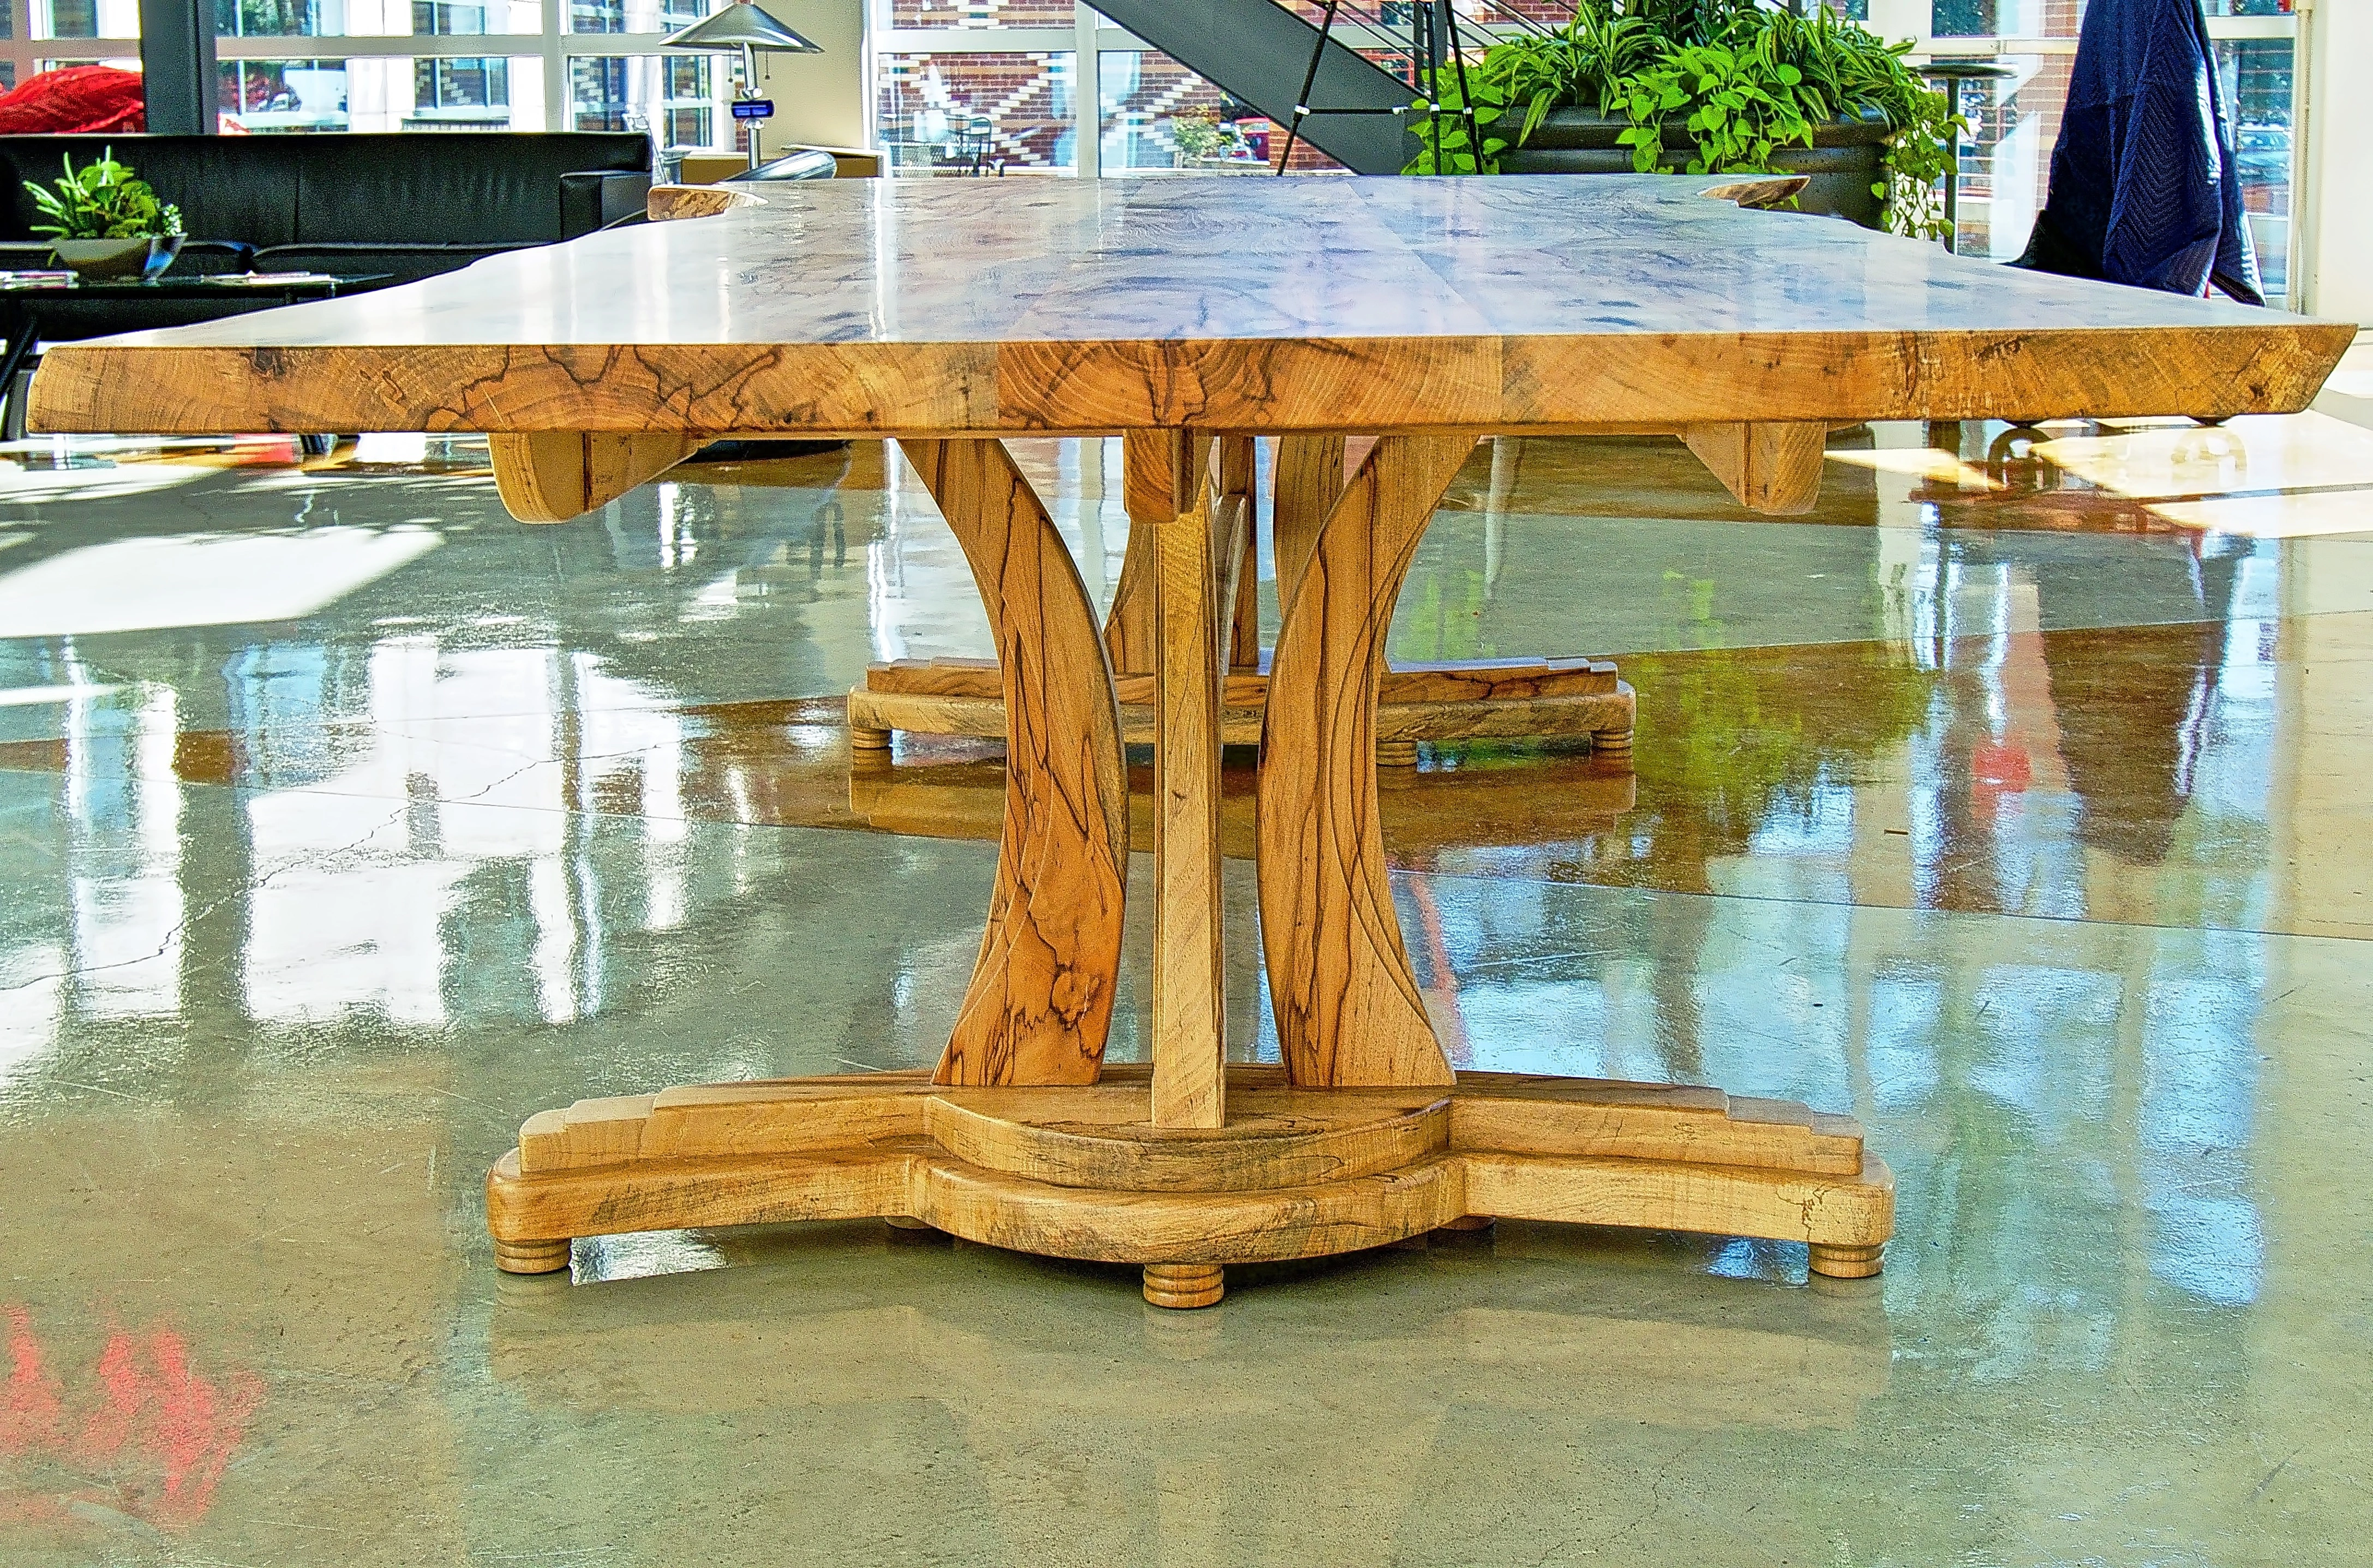 Live edge Texas pecan table with sculptural base.